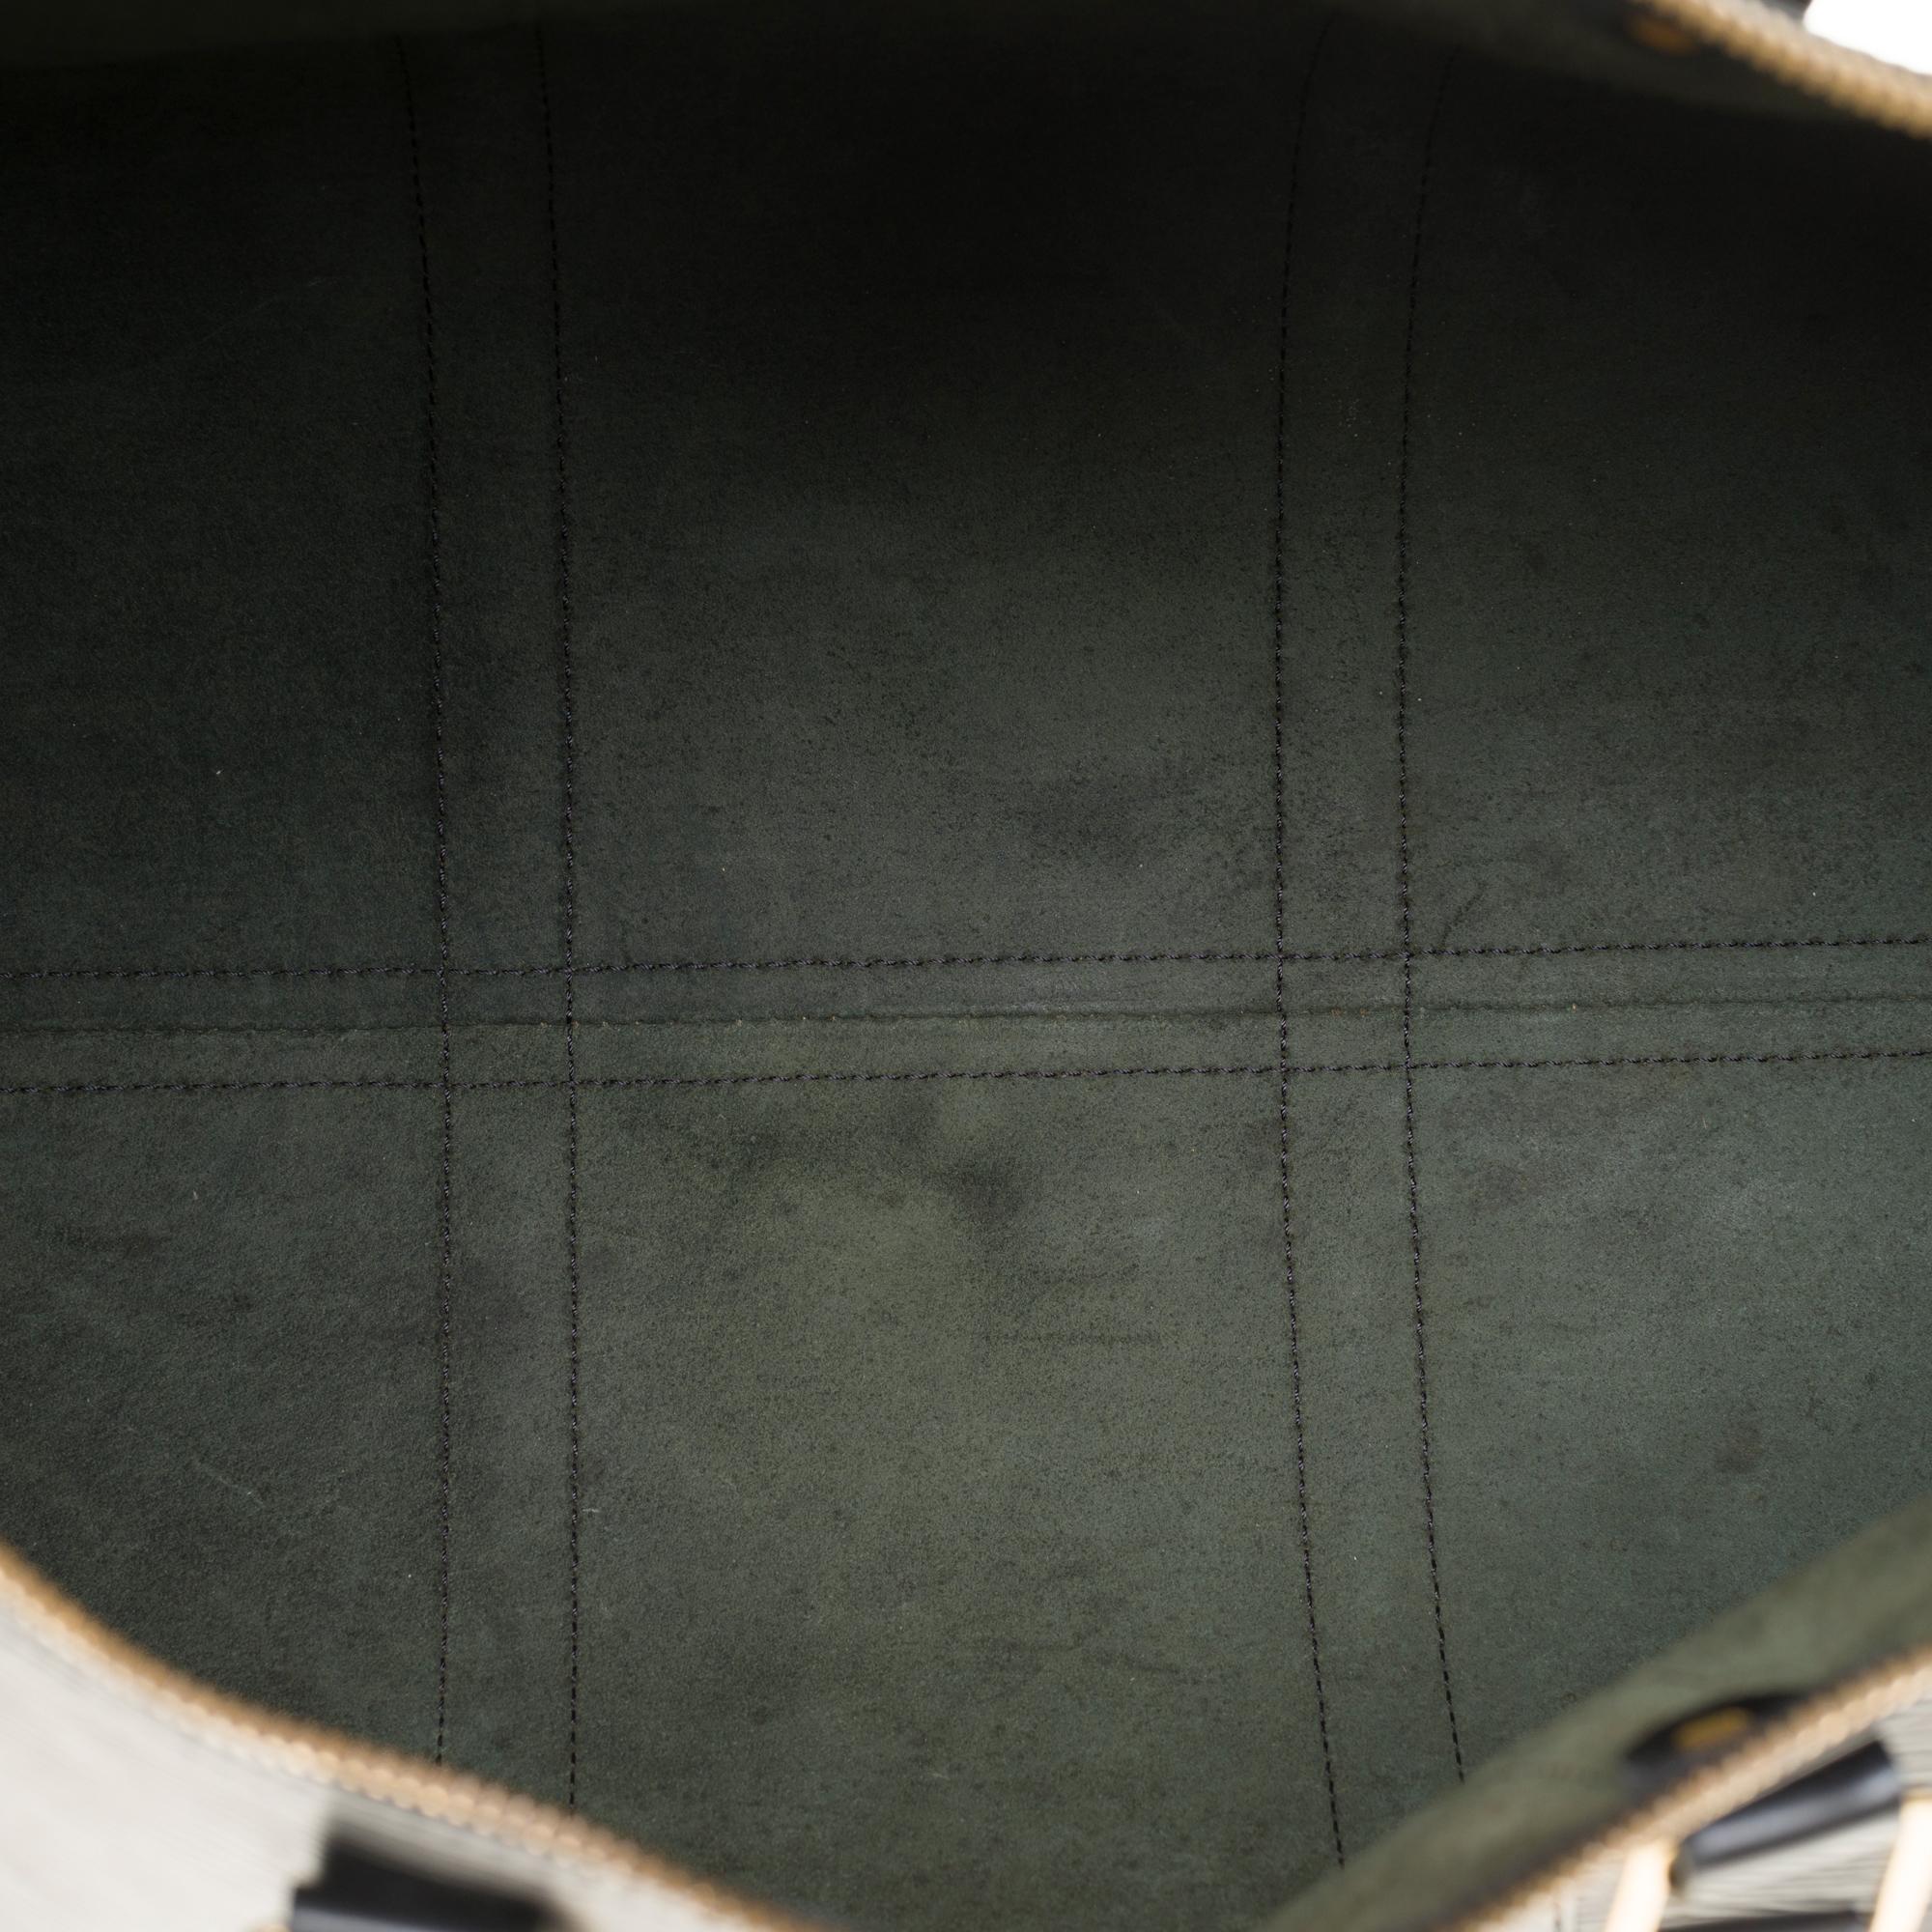 Louis Vuitton Keepall 50 Travel bag in black épi leather 2